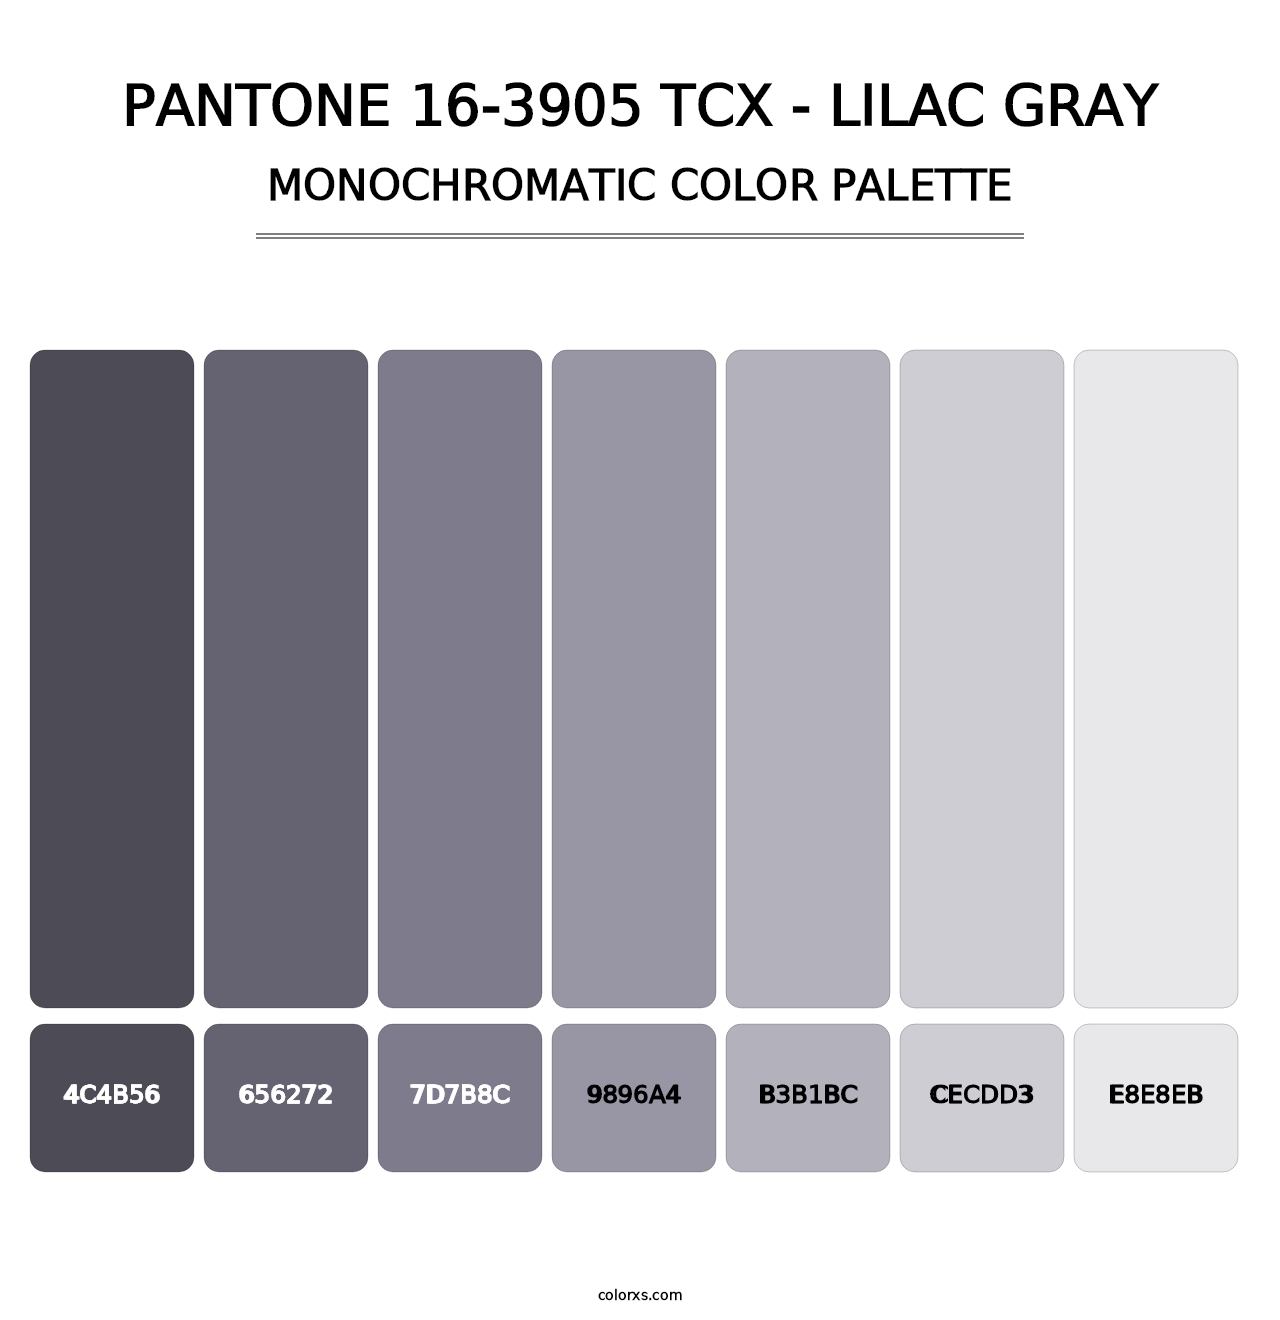 PANTONE 16-3905 TCX - Lilac Gray - Monochromatic Color Palette